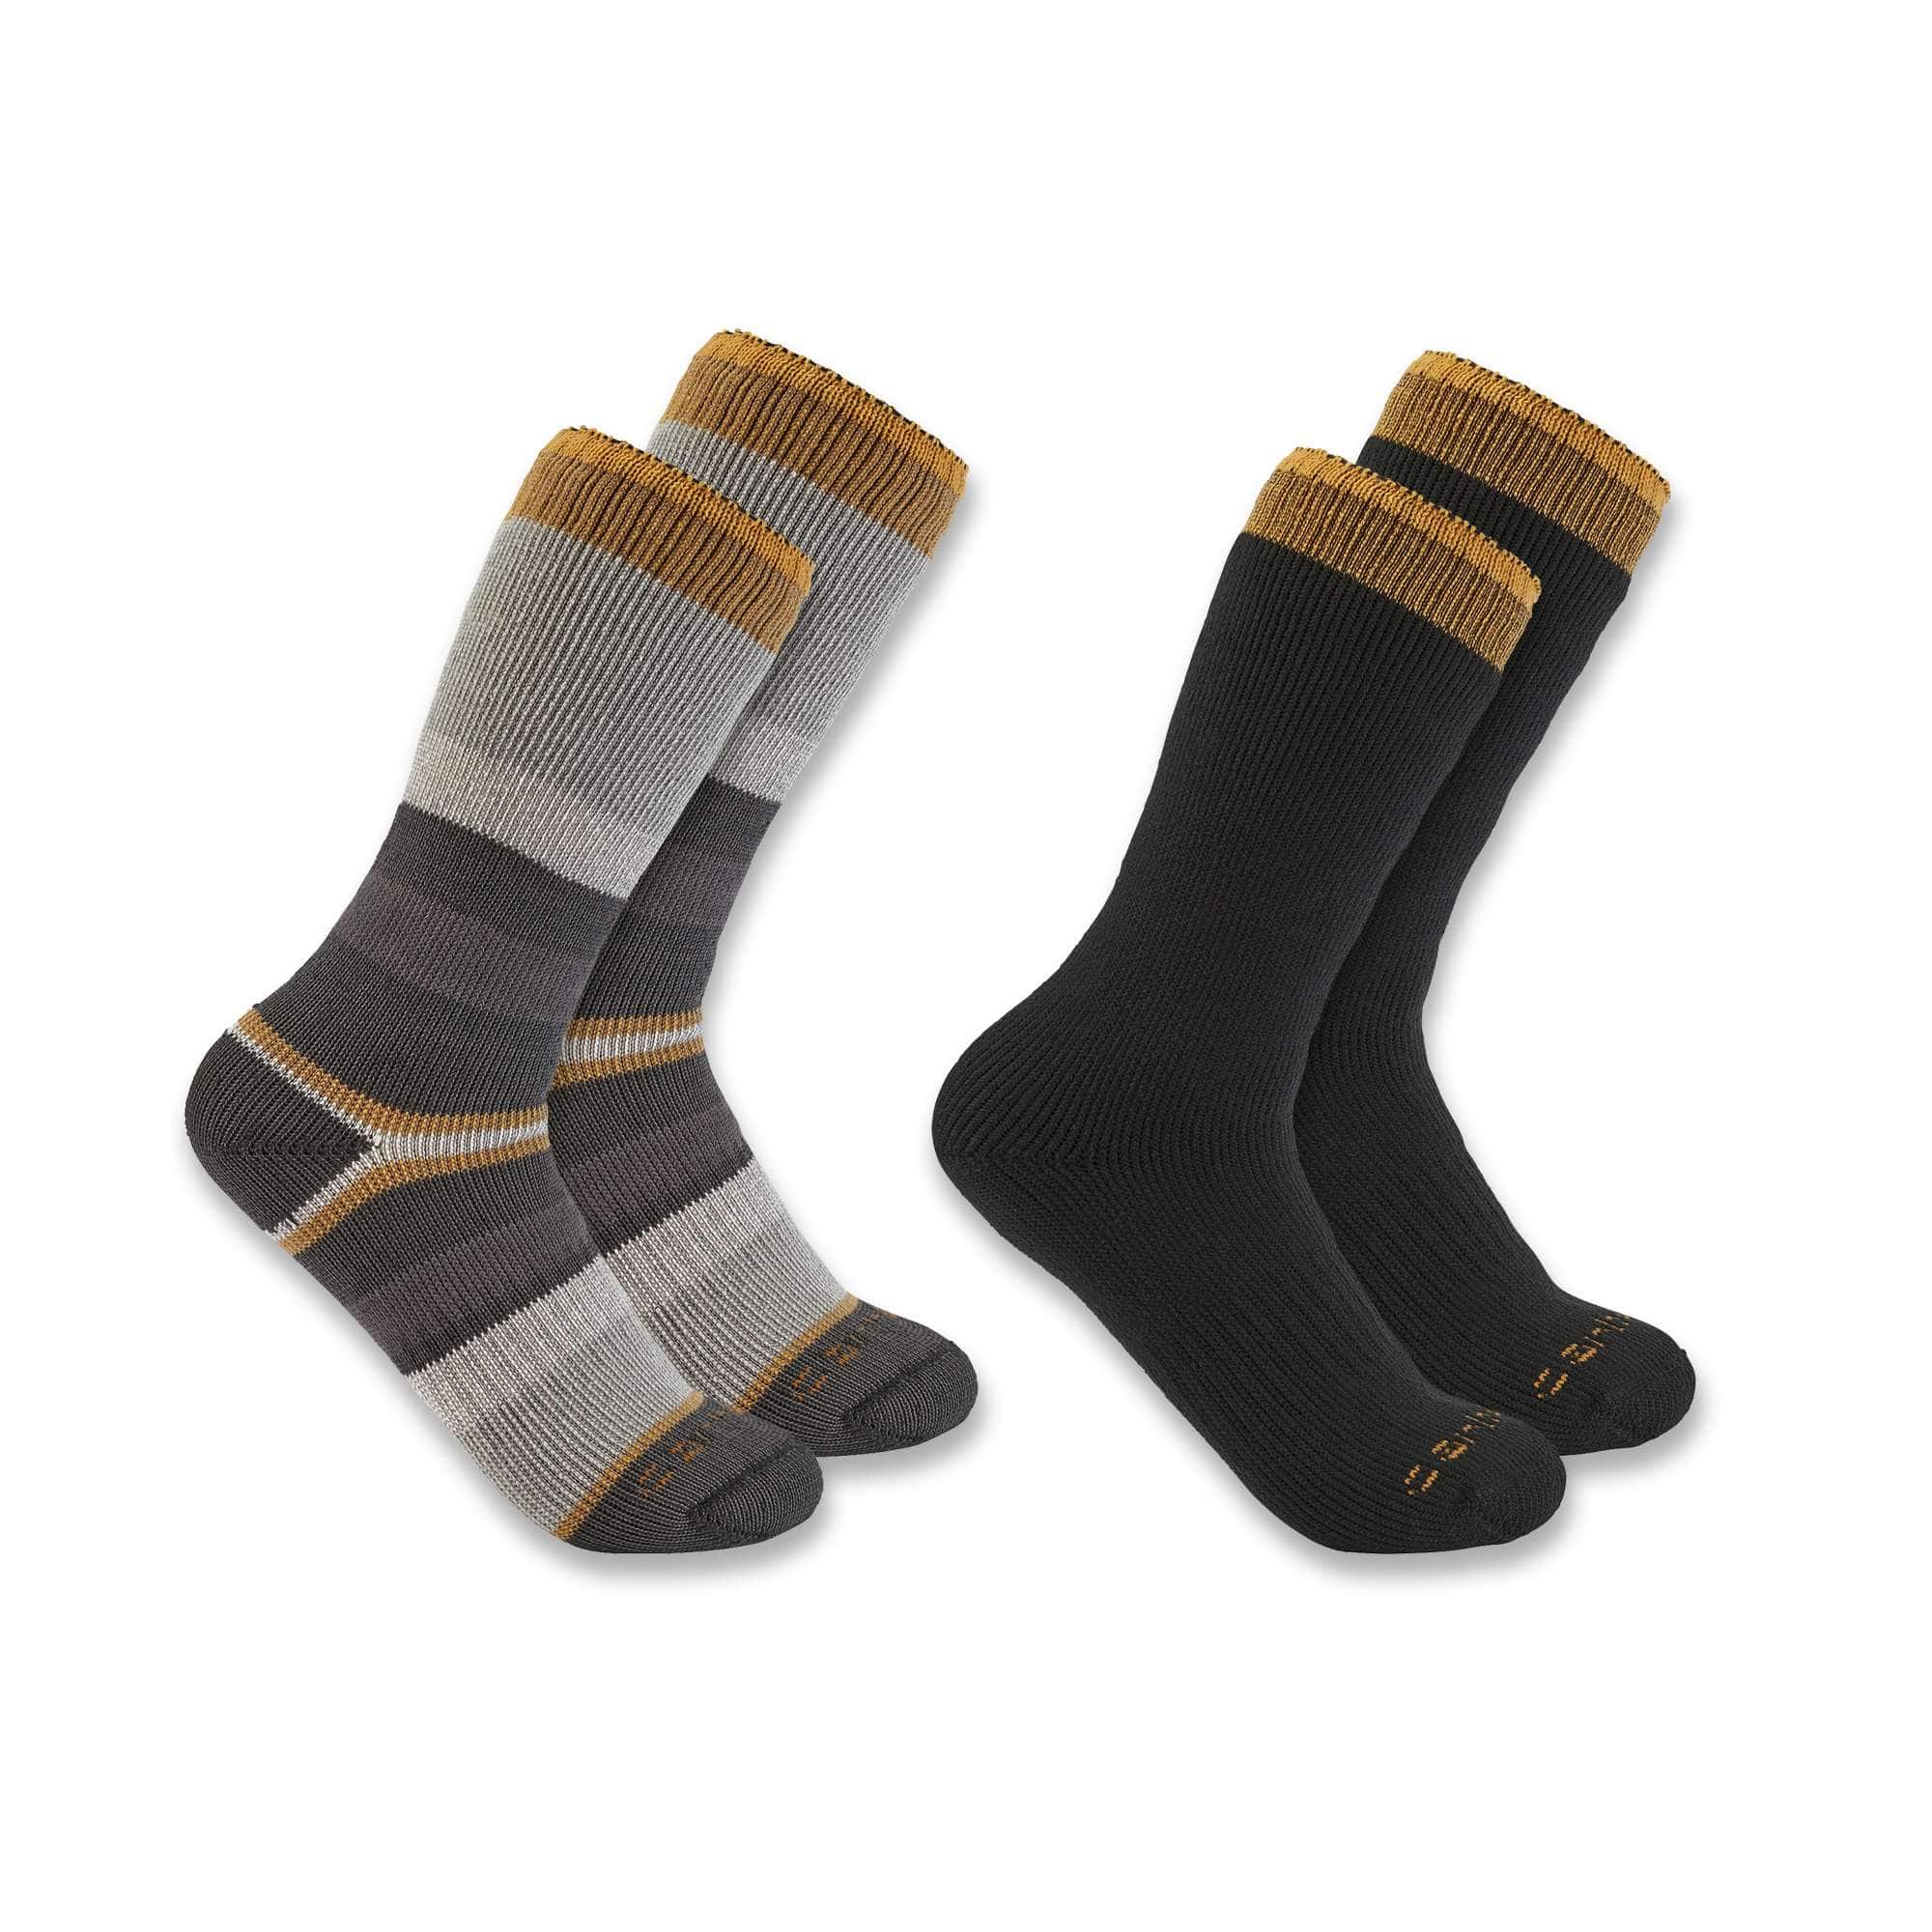 Socks With Logo At Front White/Dark Grey/Dark Blue/Black And Green